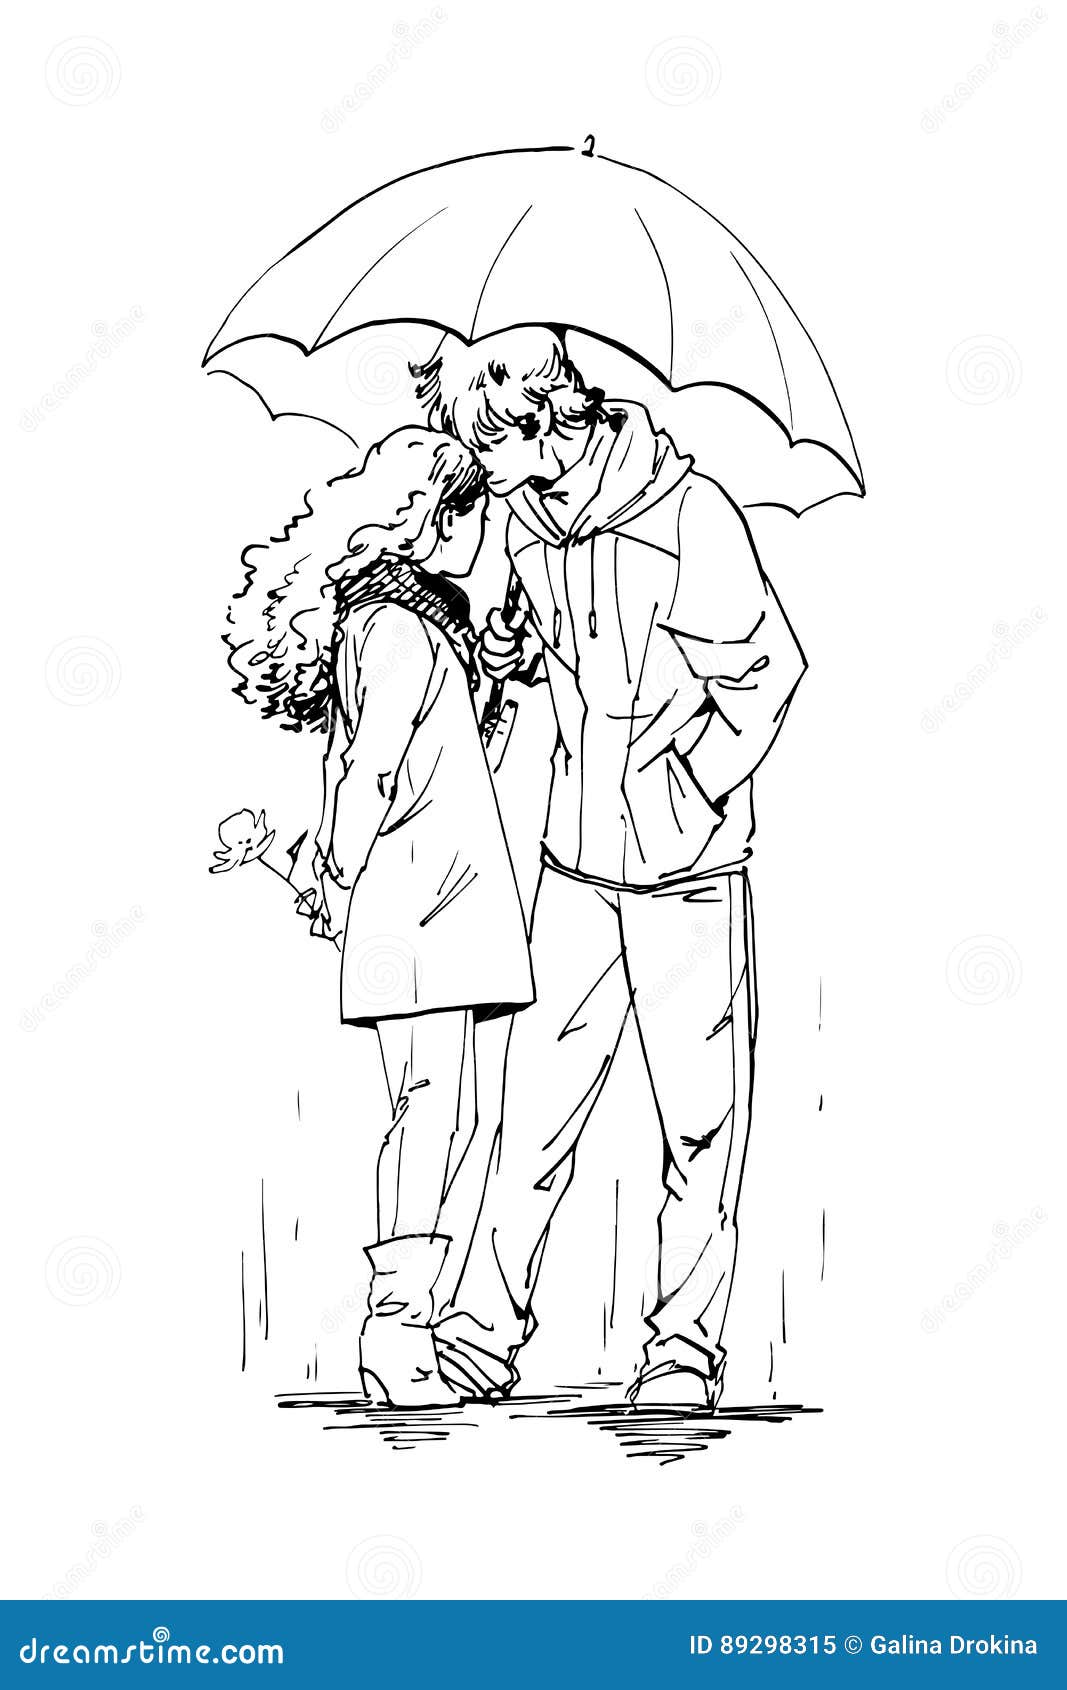 Couple Under Umbrella in Rain Sketch